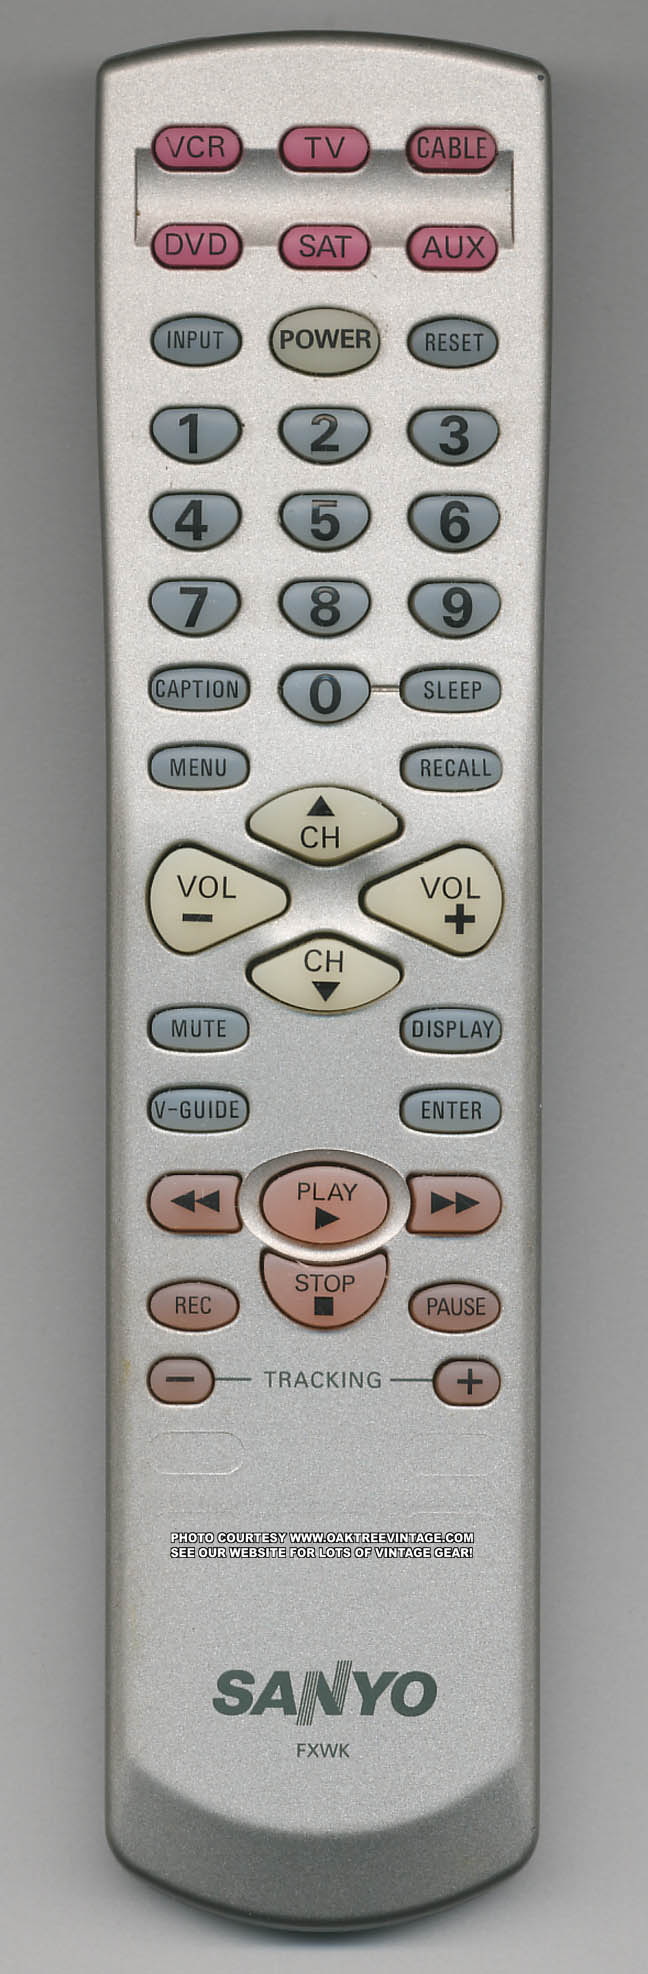 Remote Program Codes For Sanyo Tv